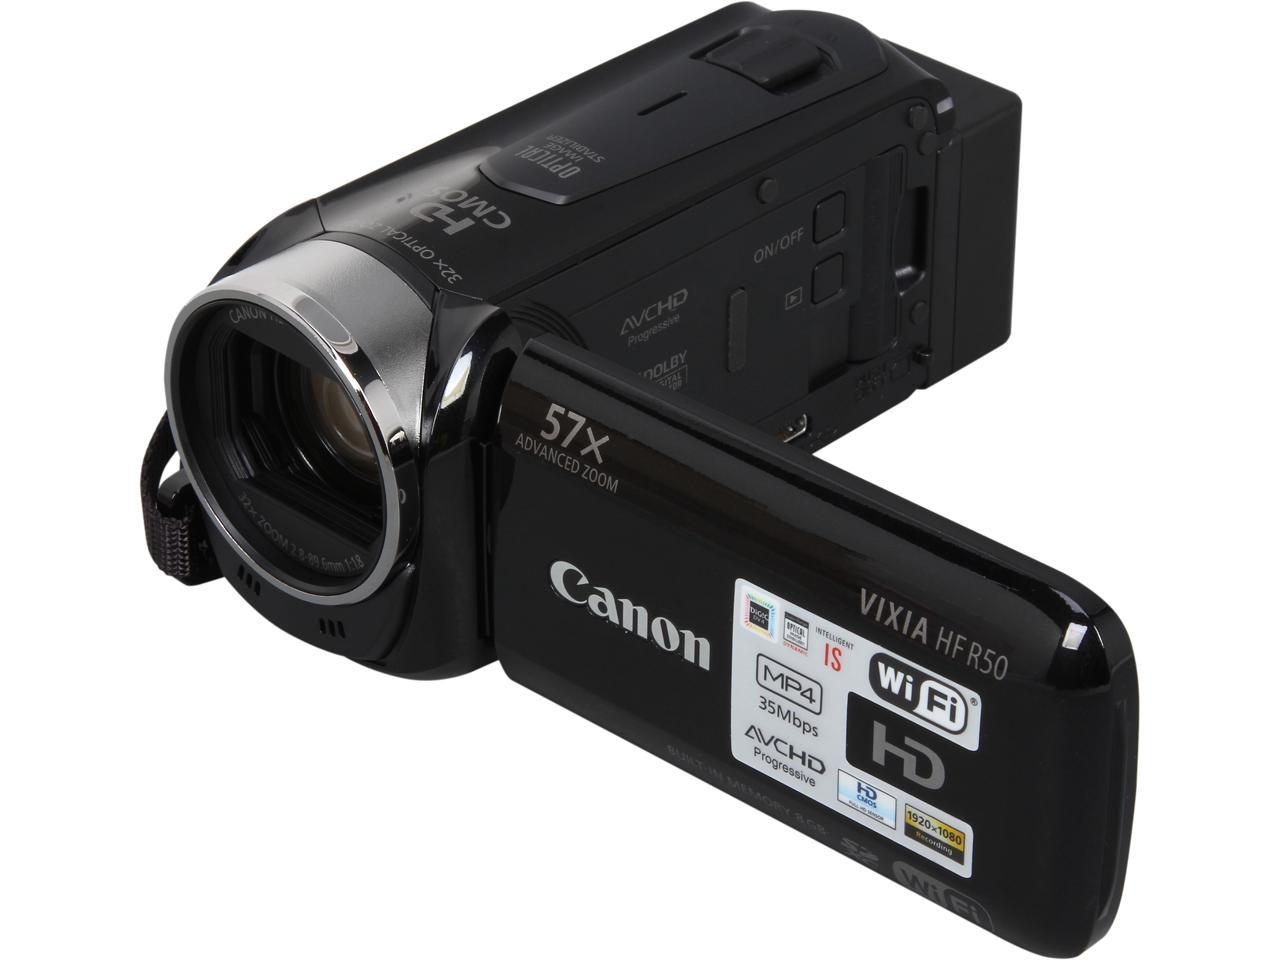 Canon VIXIA HF R50 9175B001 Black Full HD HDD/Flash Memory Camcorder